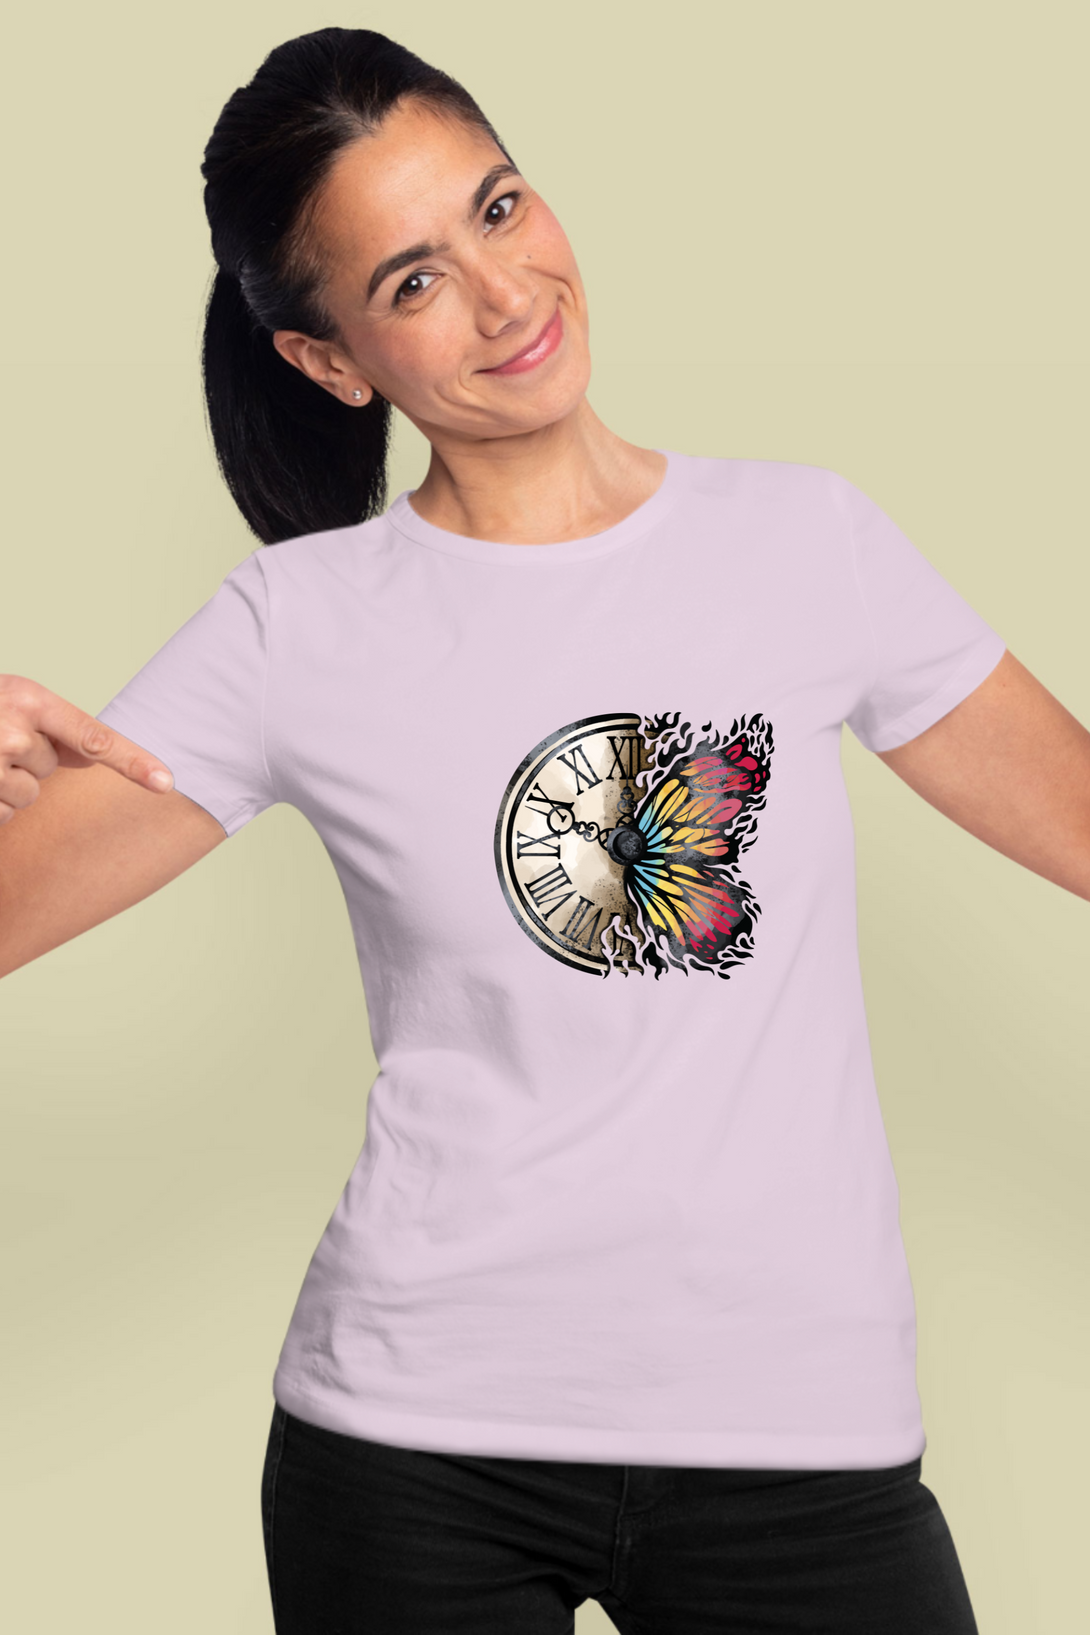 Vintage Clock Printed T-Shirt For Women - WowWaves - 9